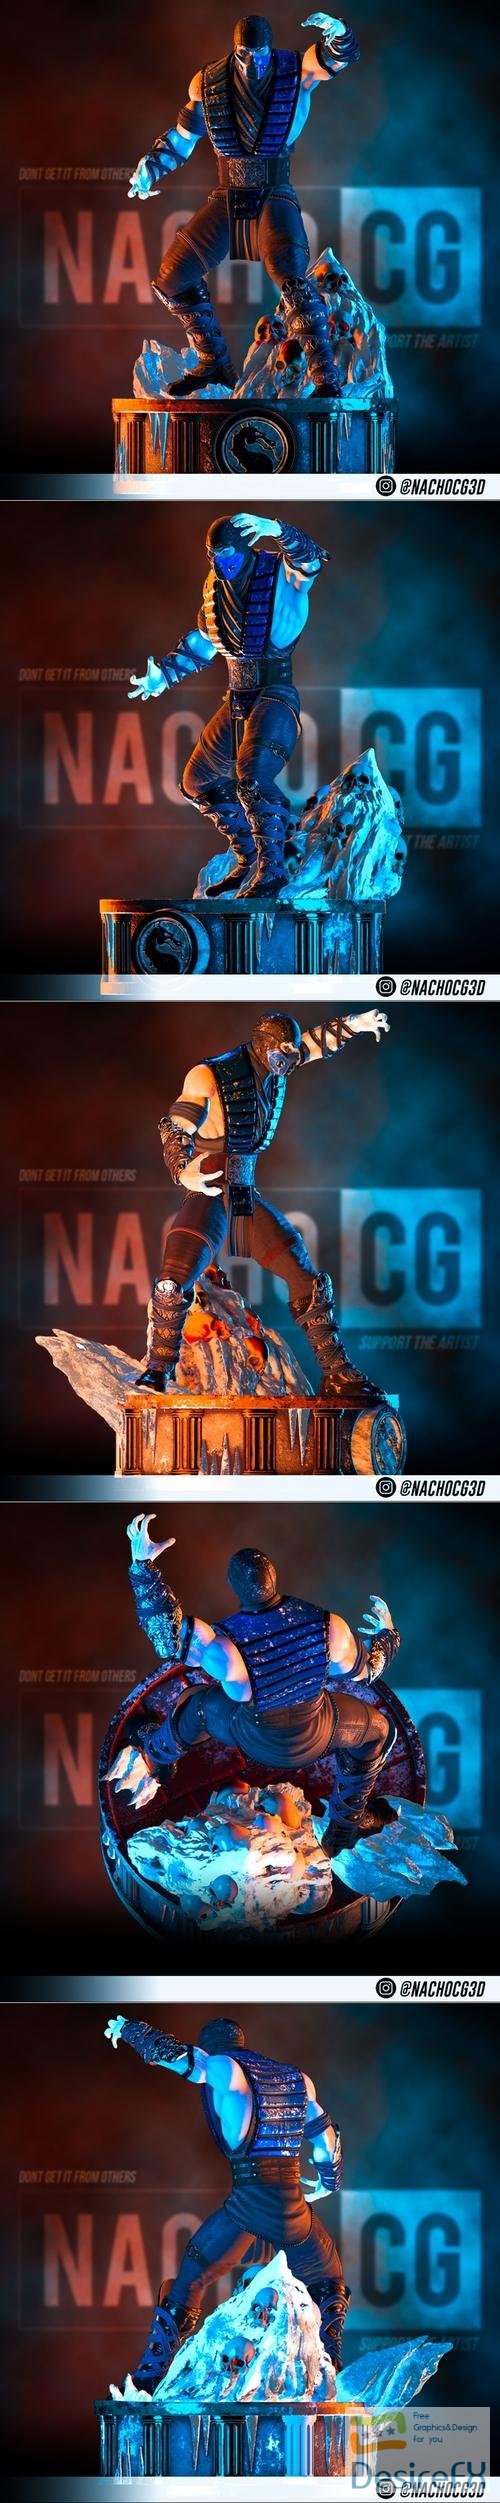 Nacho CG - Sub Zero from MK – 3D Print